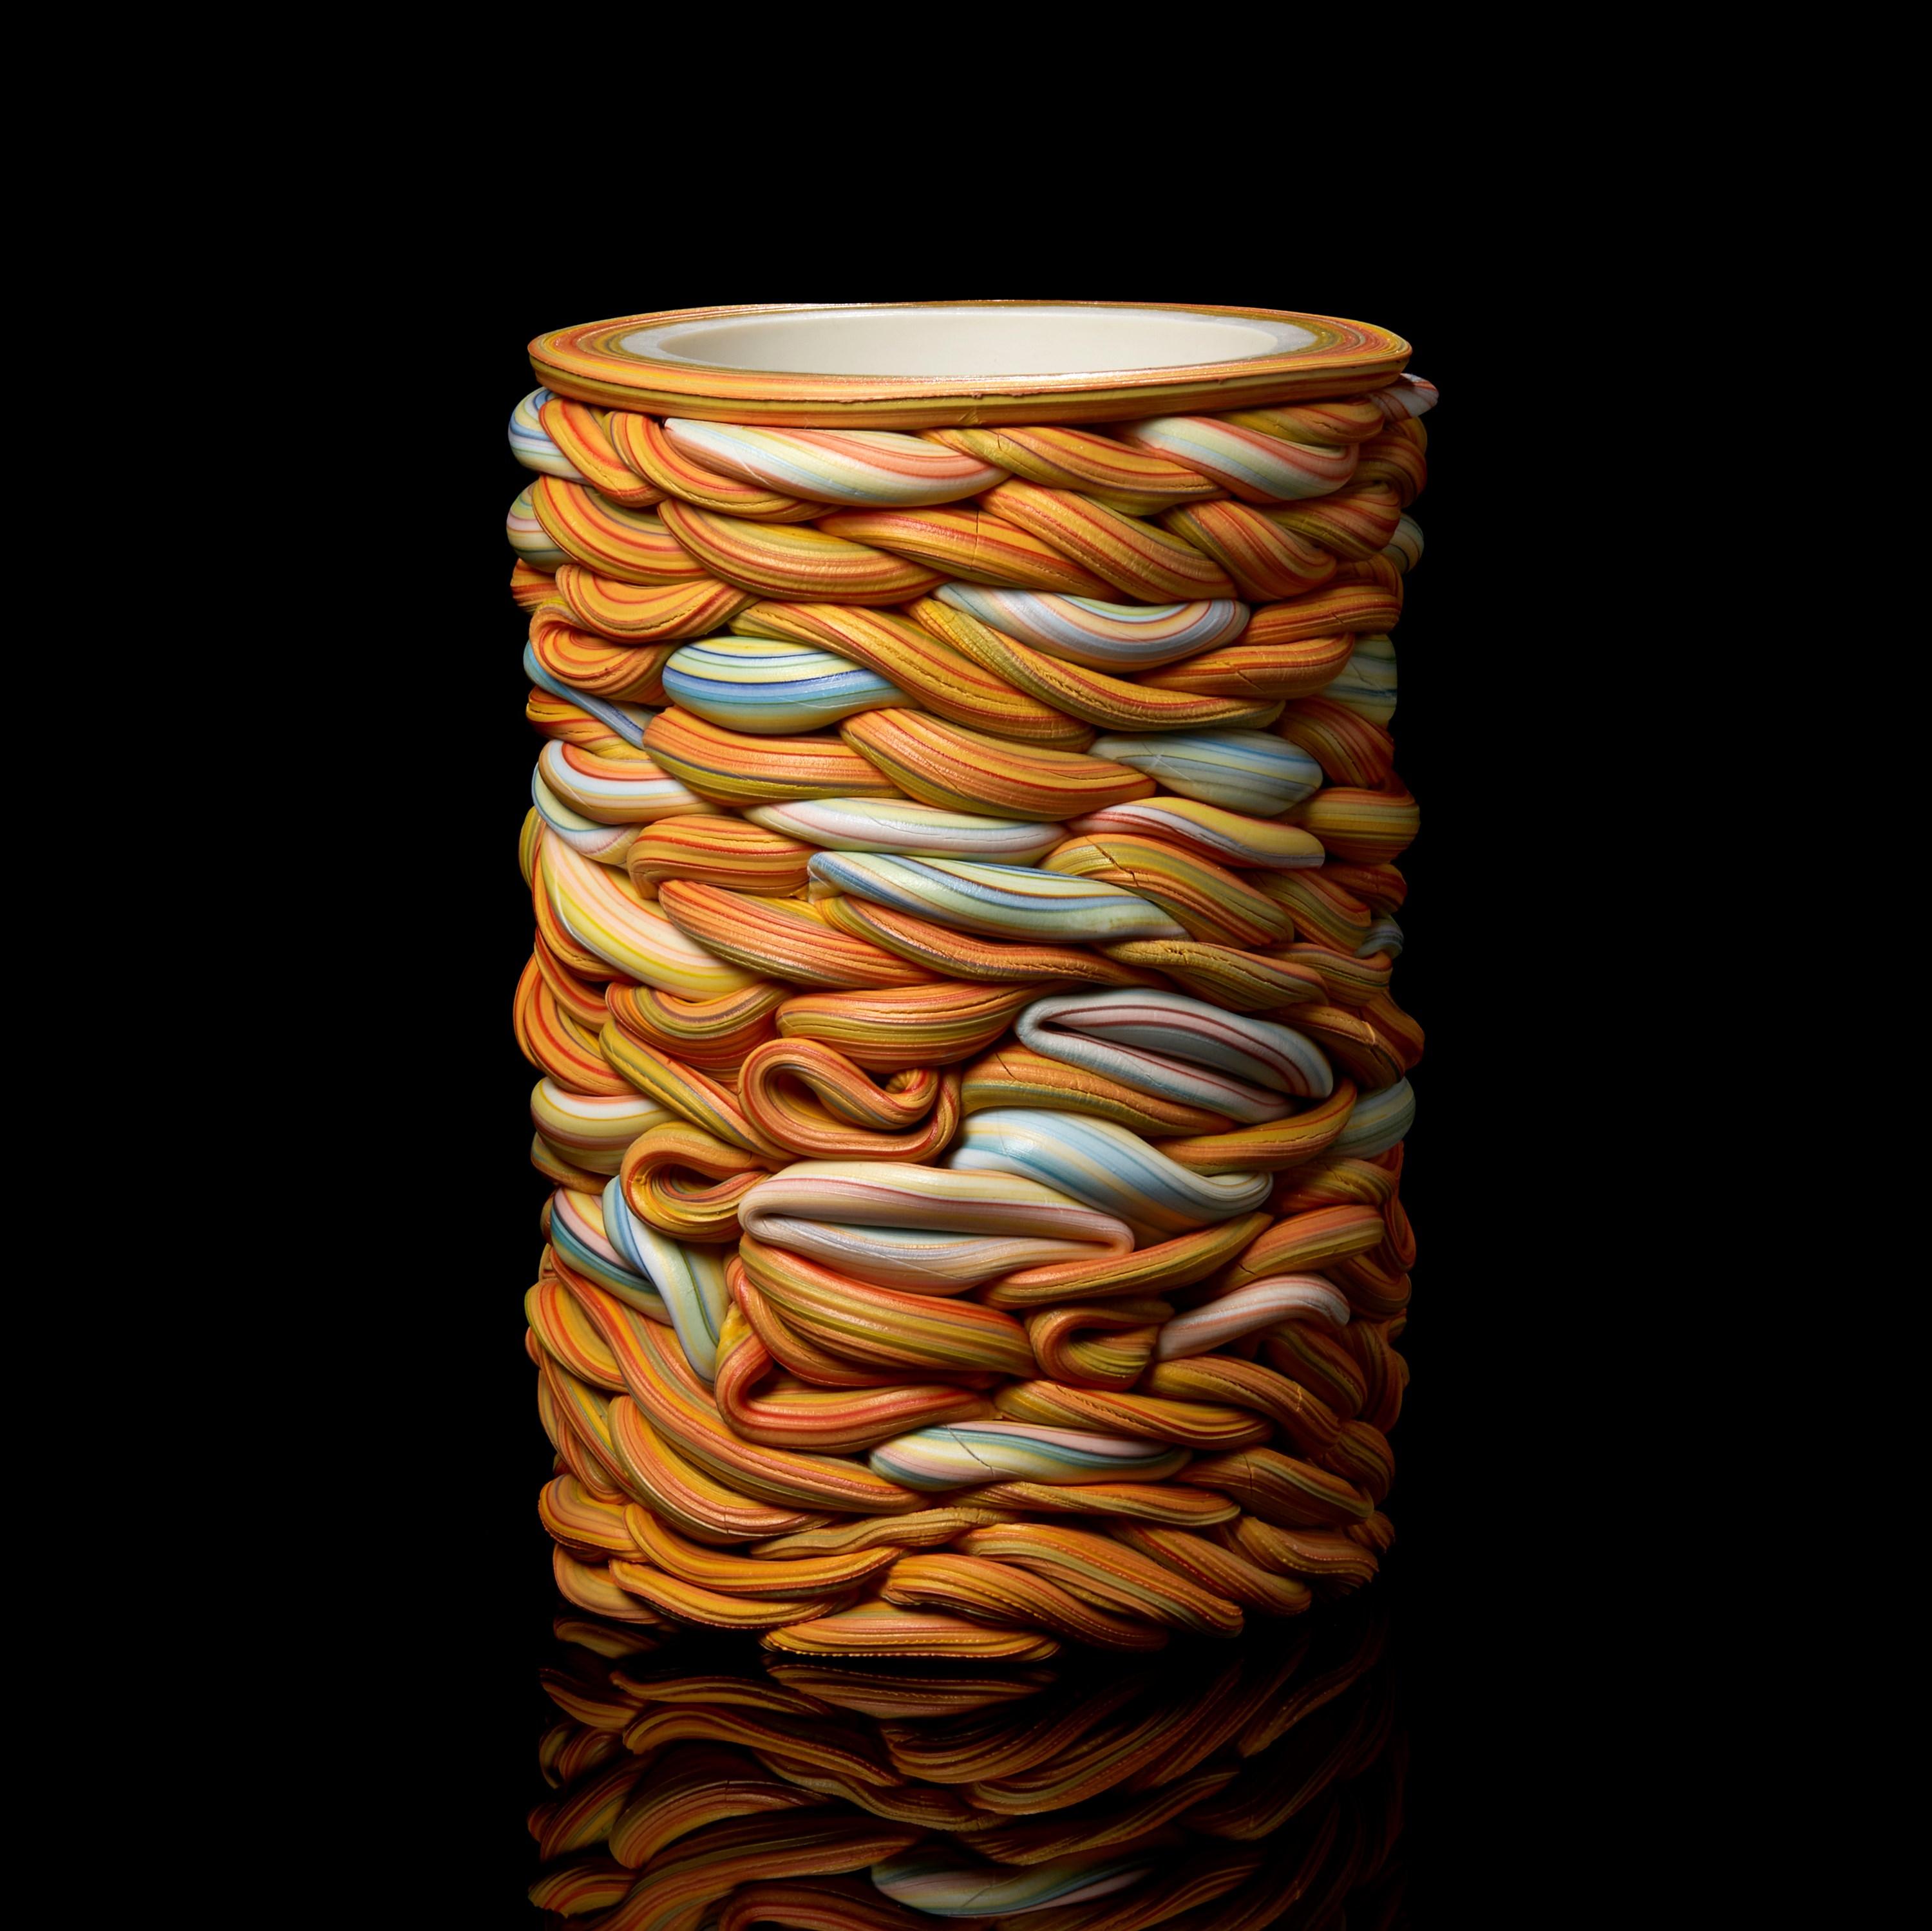 Organic Modern Striped Fold I, A Mixed Colour Porcelain Sculptural Vessel by Steven Edwards